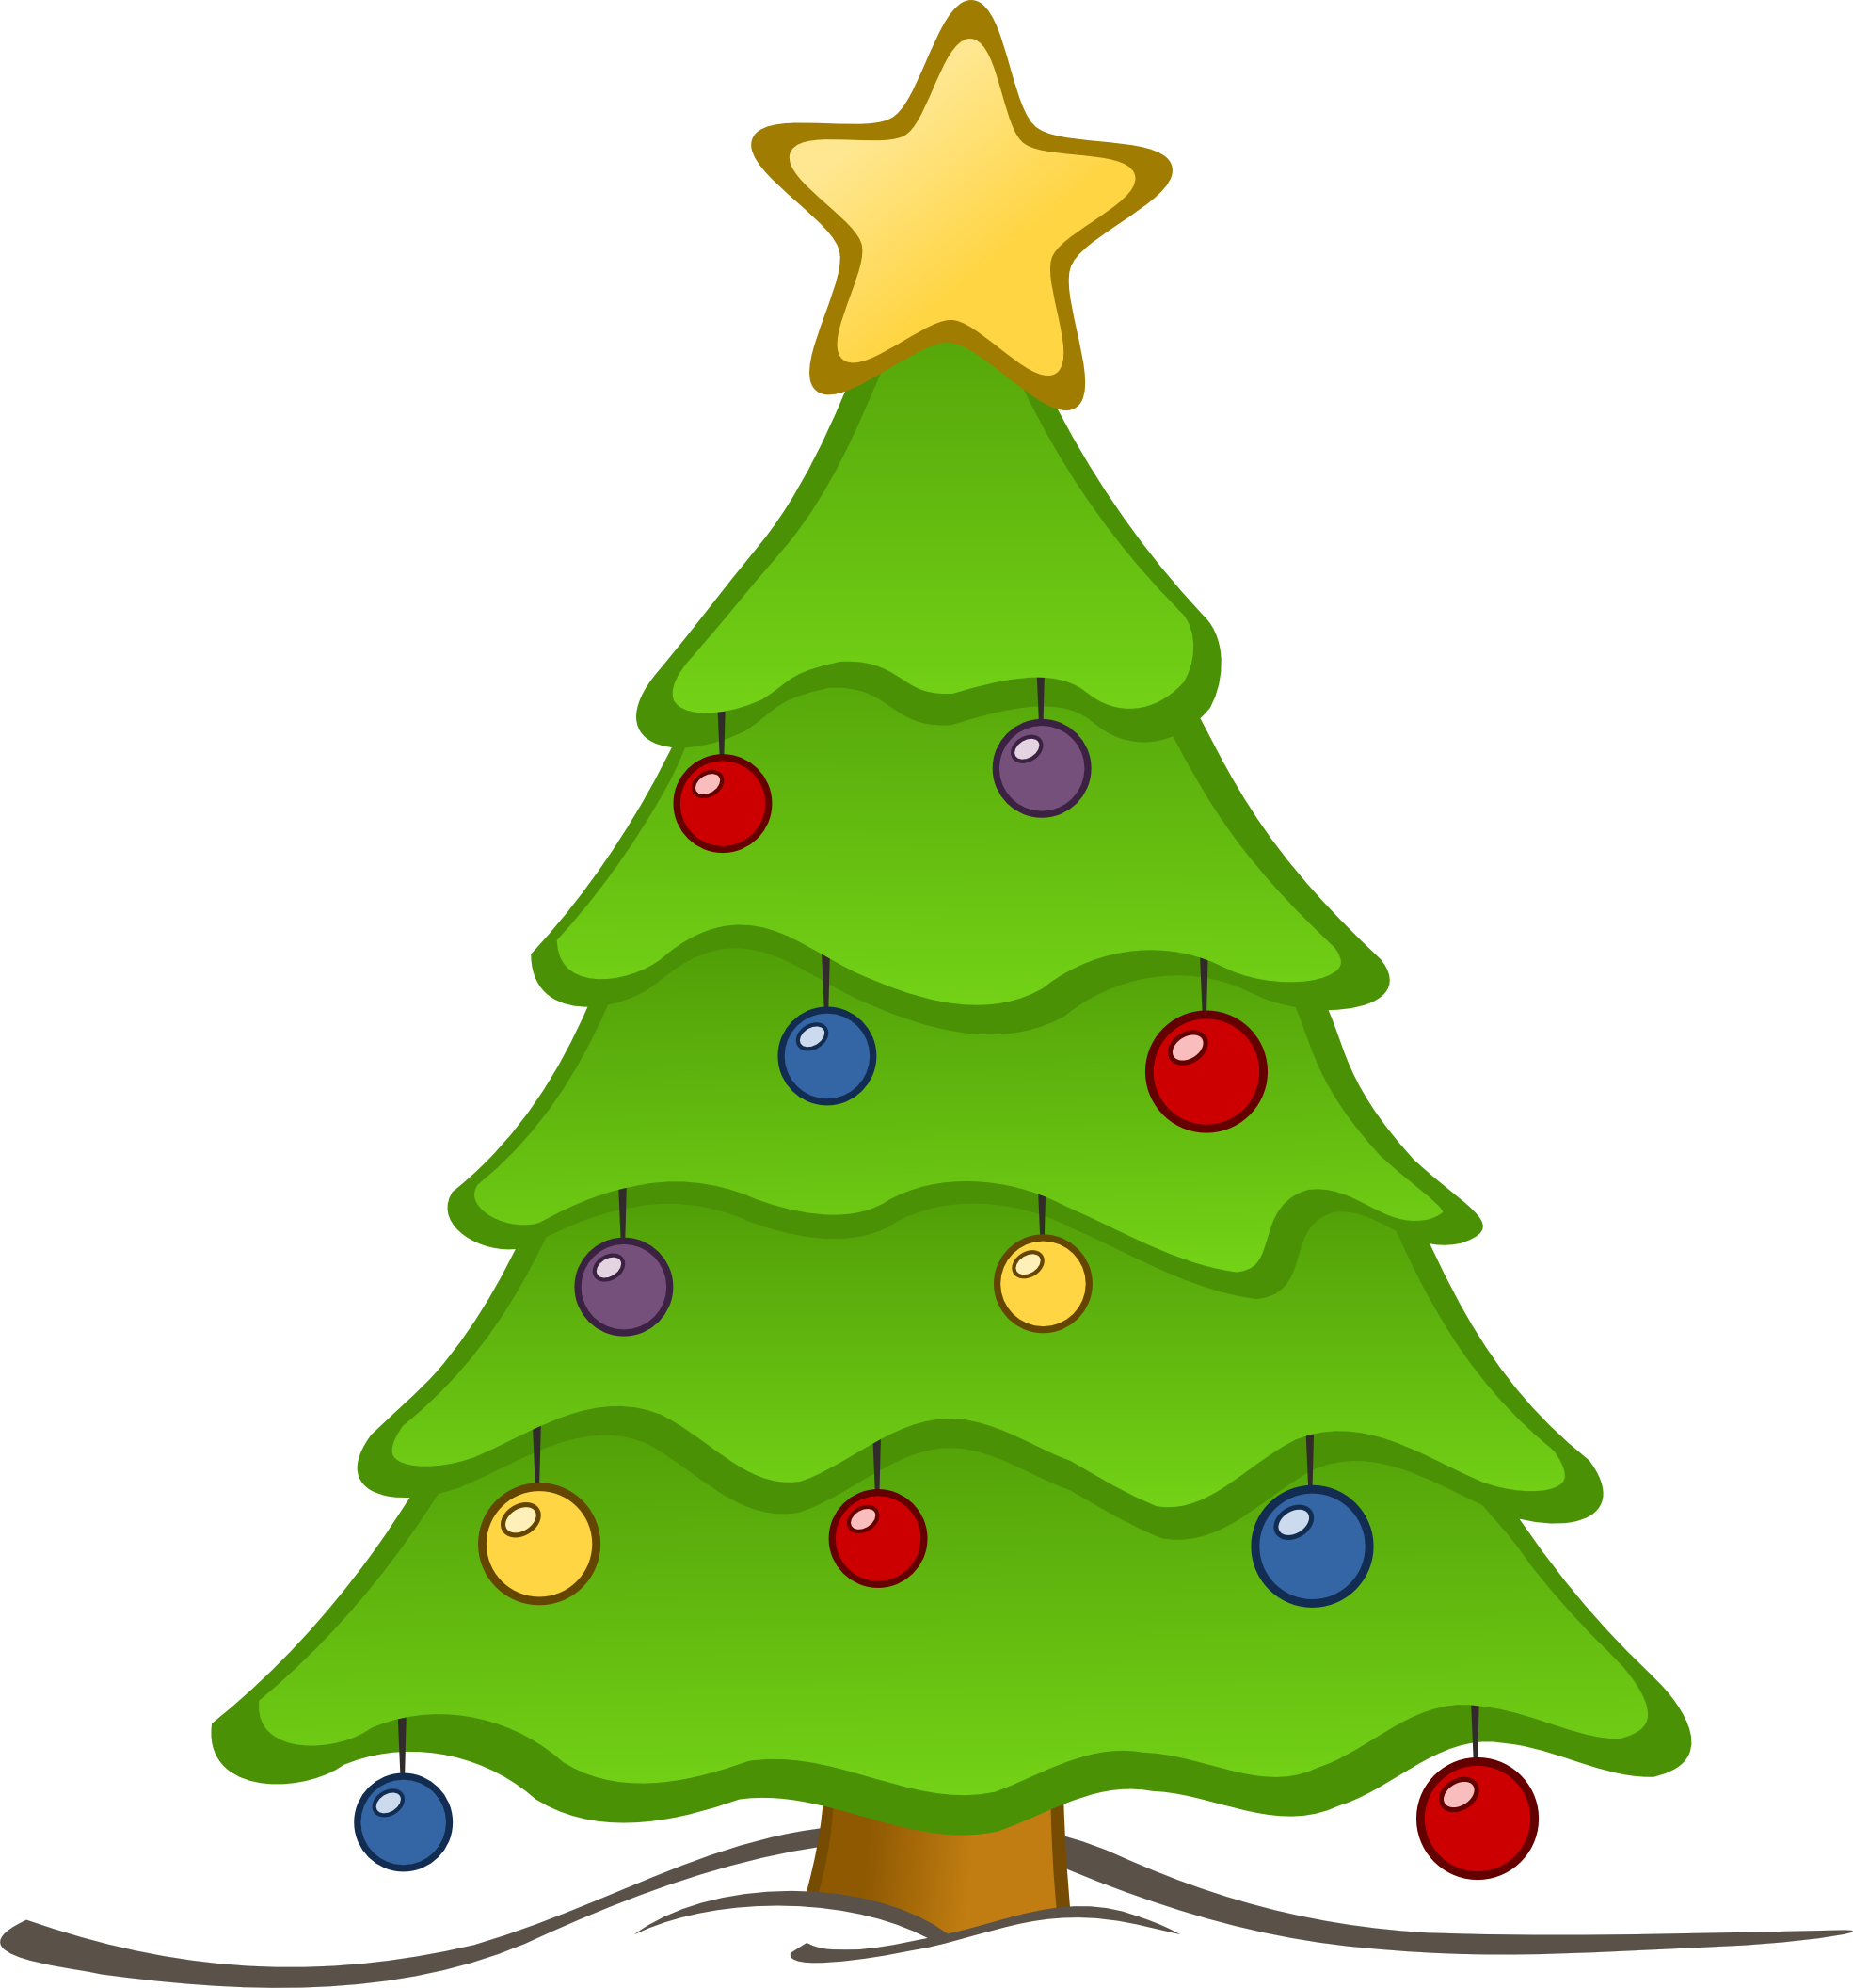 Christmas Trees Clip Art - cl